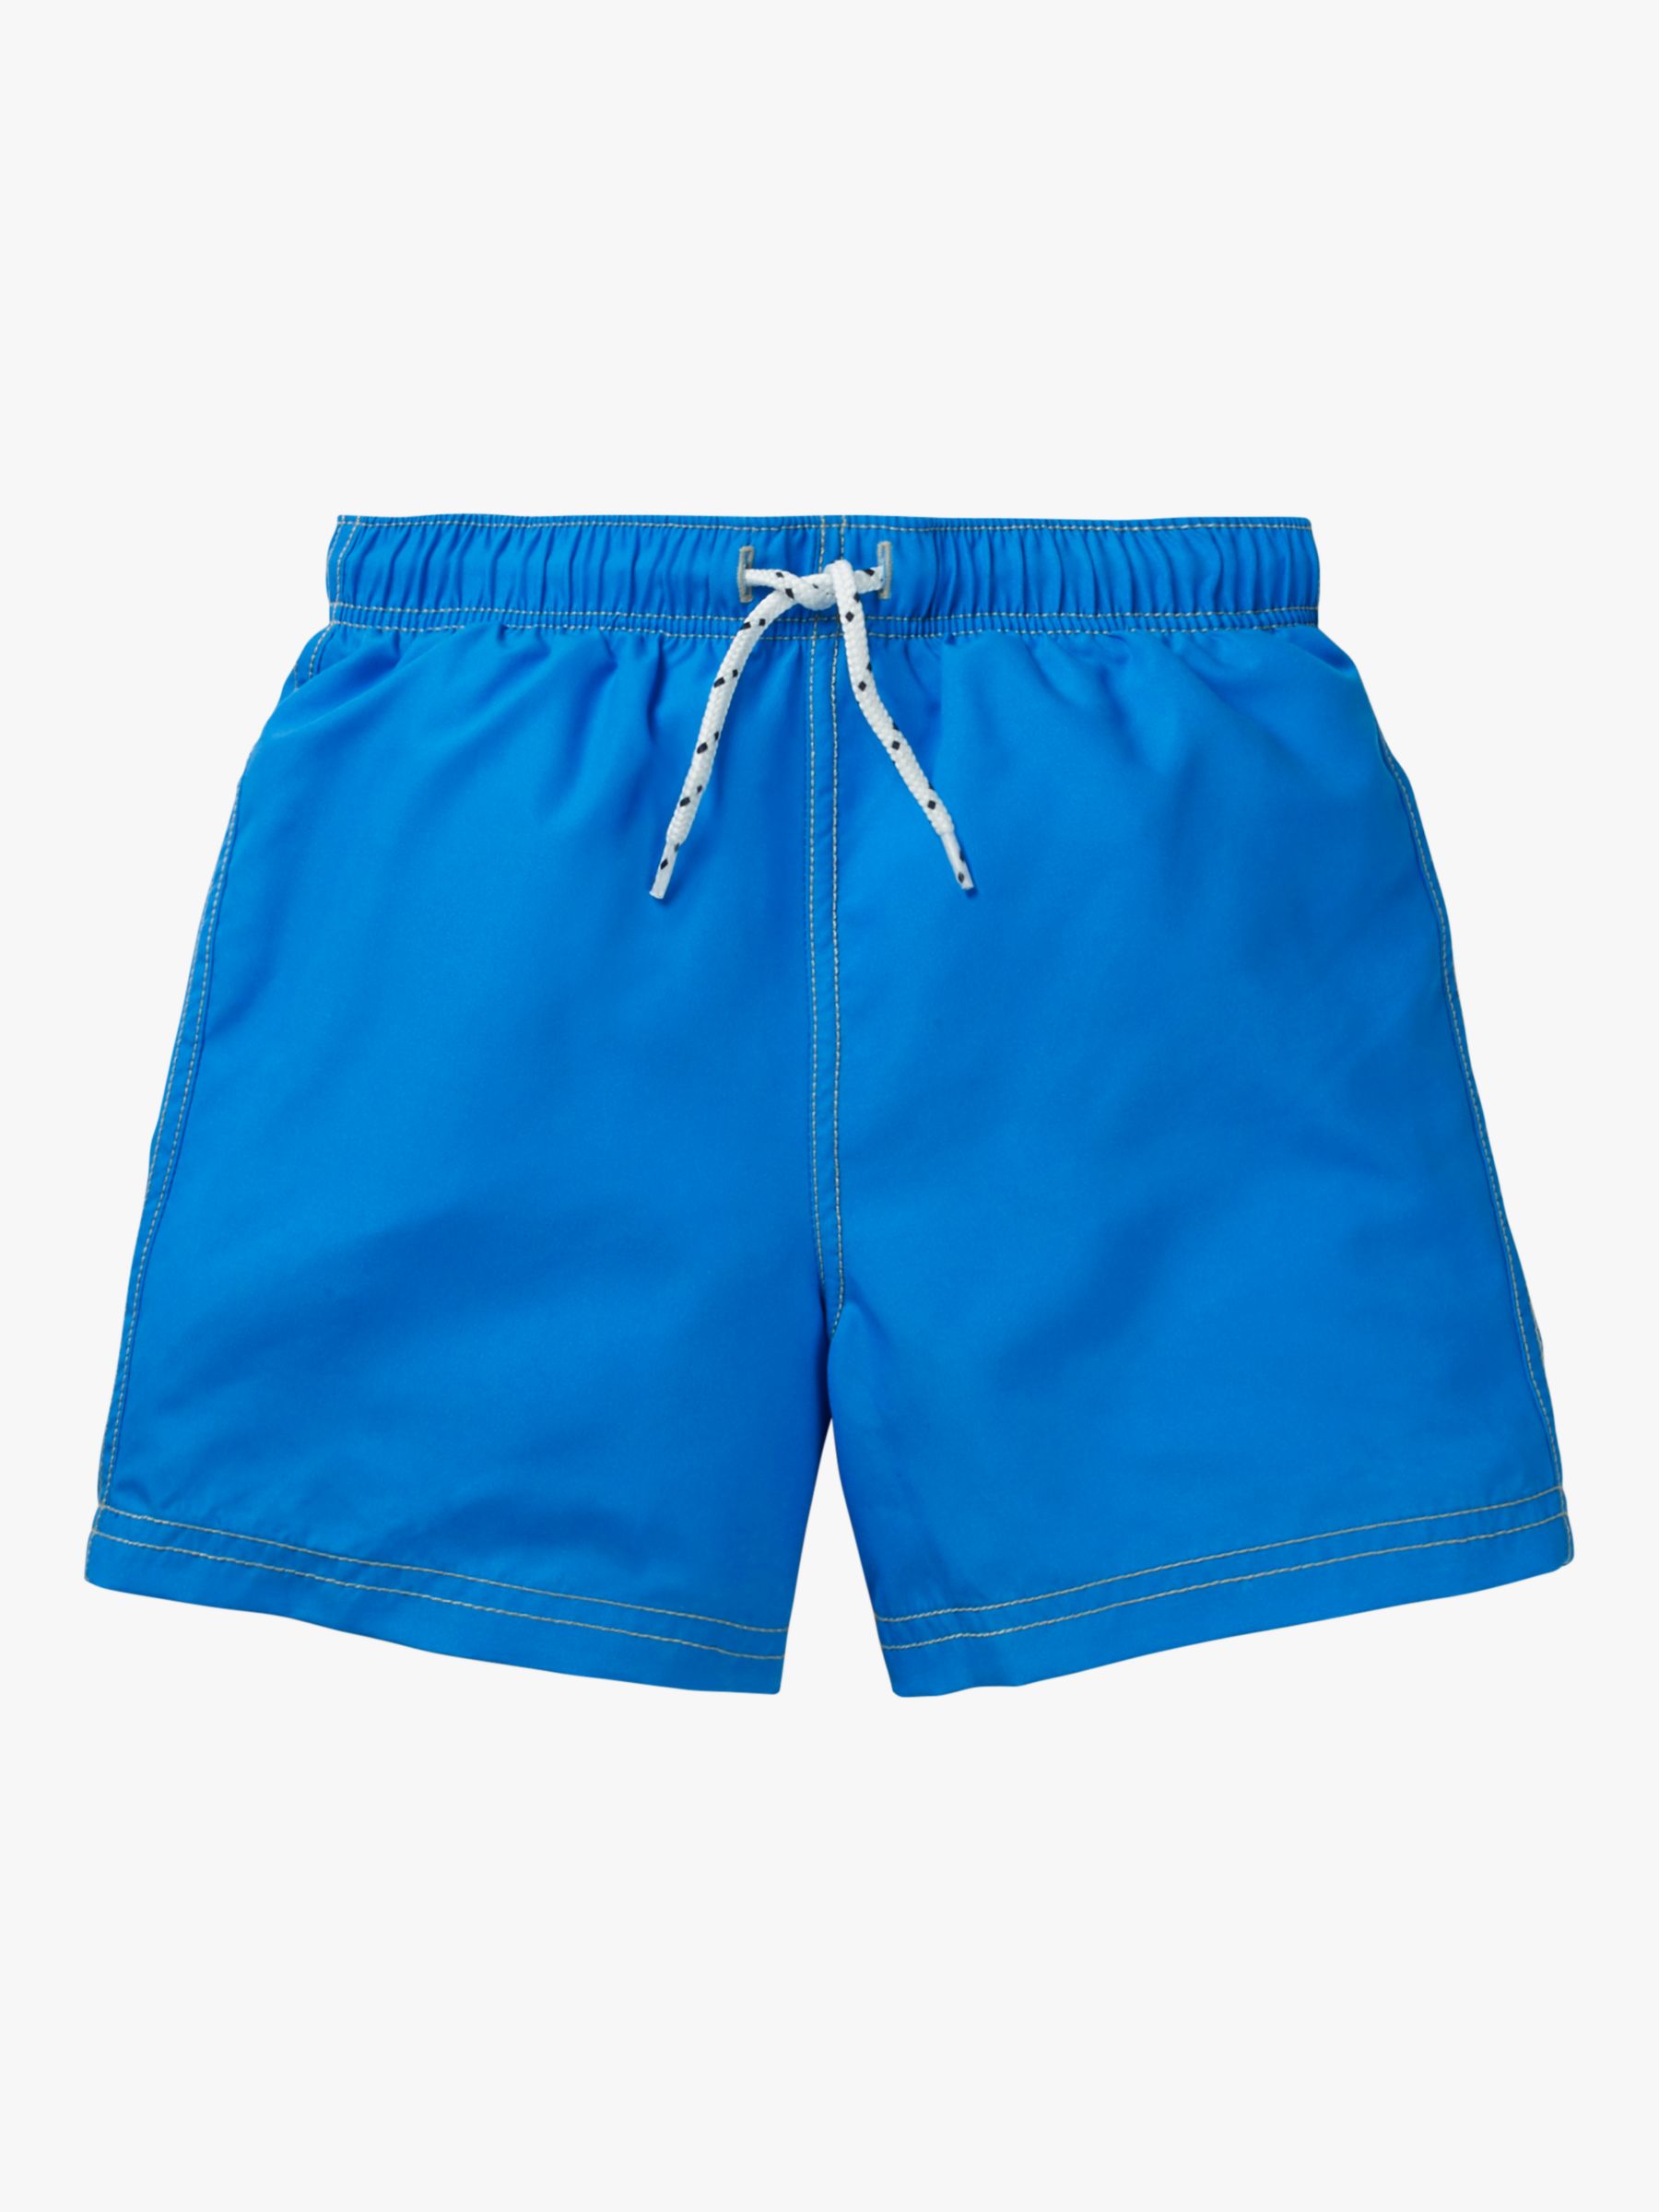 Mini Boden Boys' Bathers Swimming Shorts, Electric Blue Shark